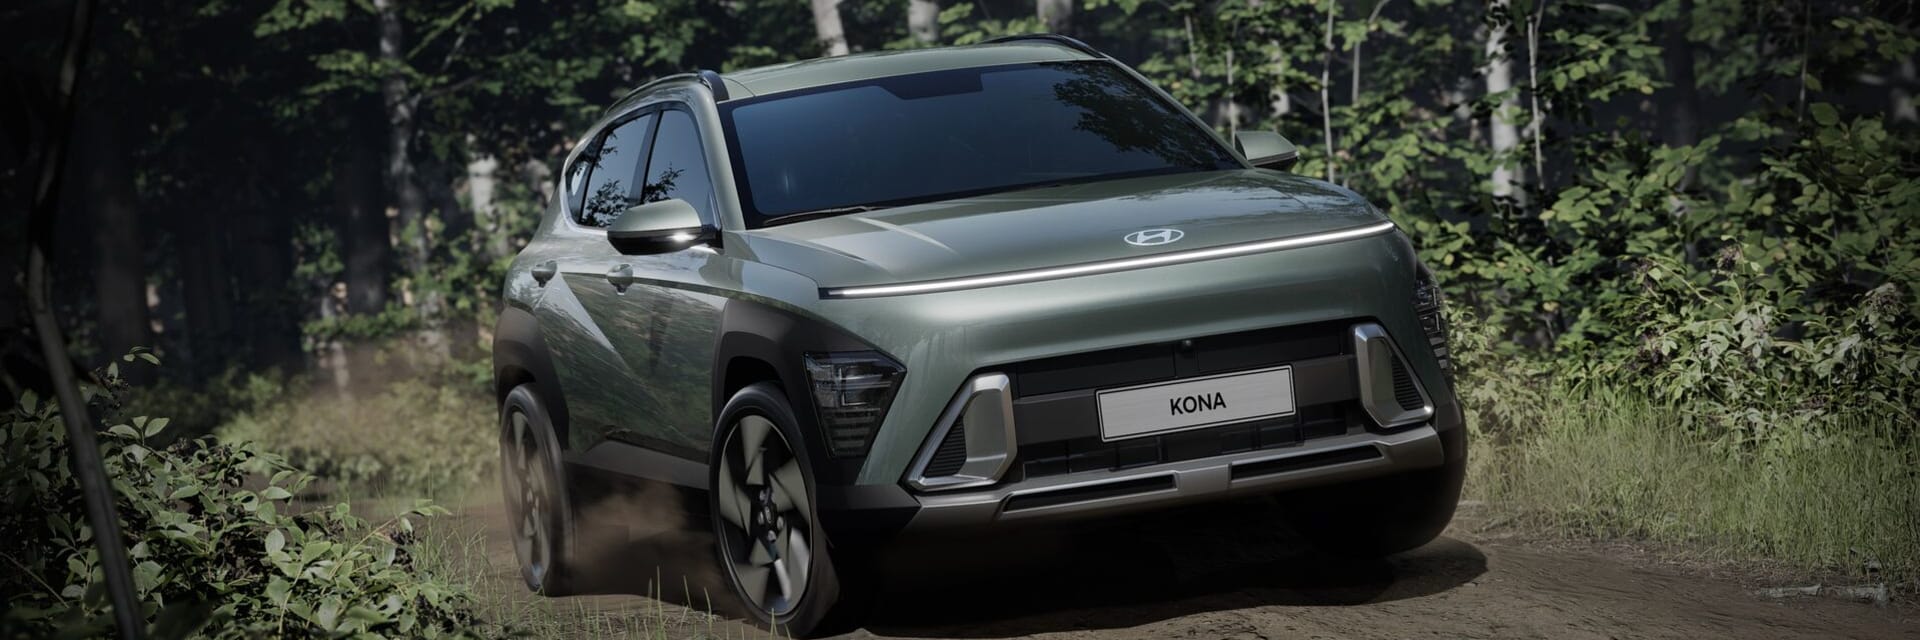 All-new Hyundai Kona